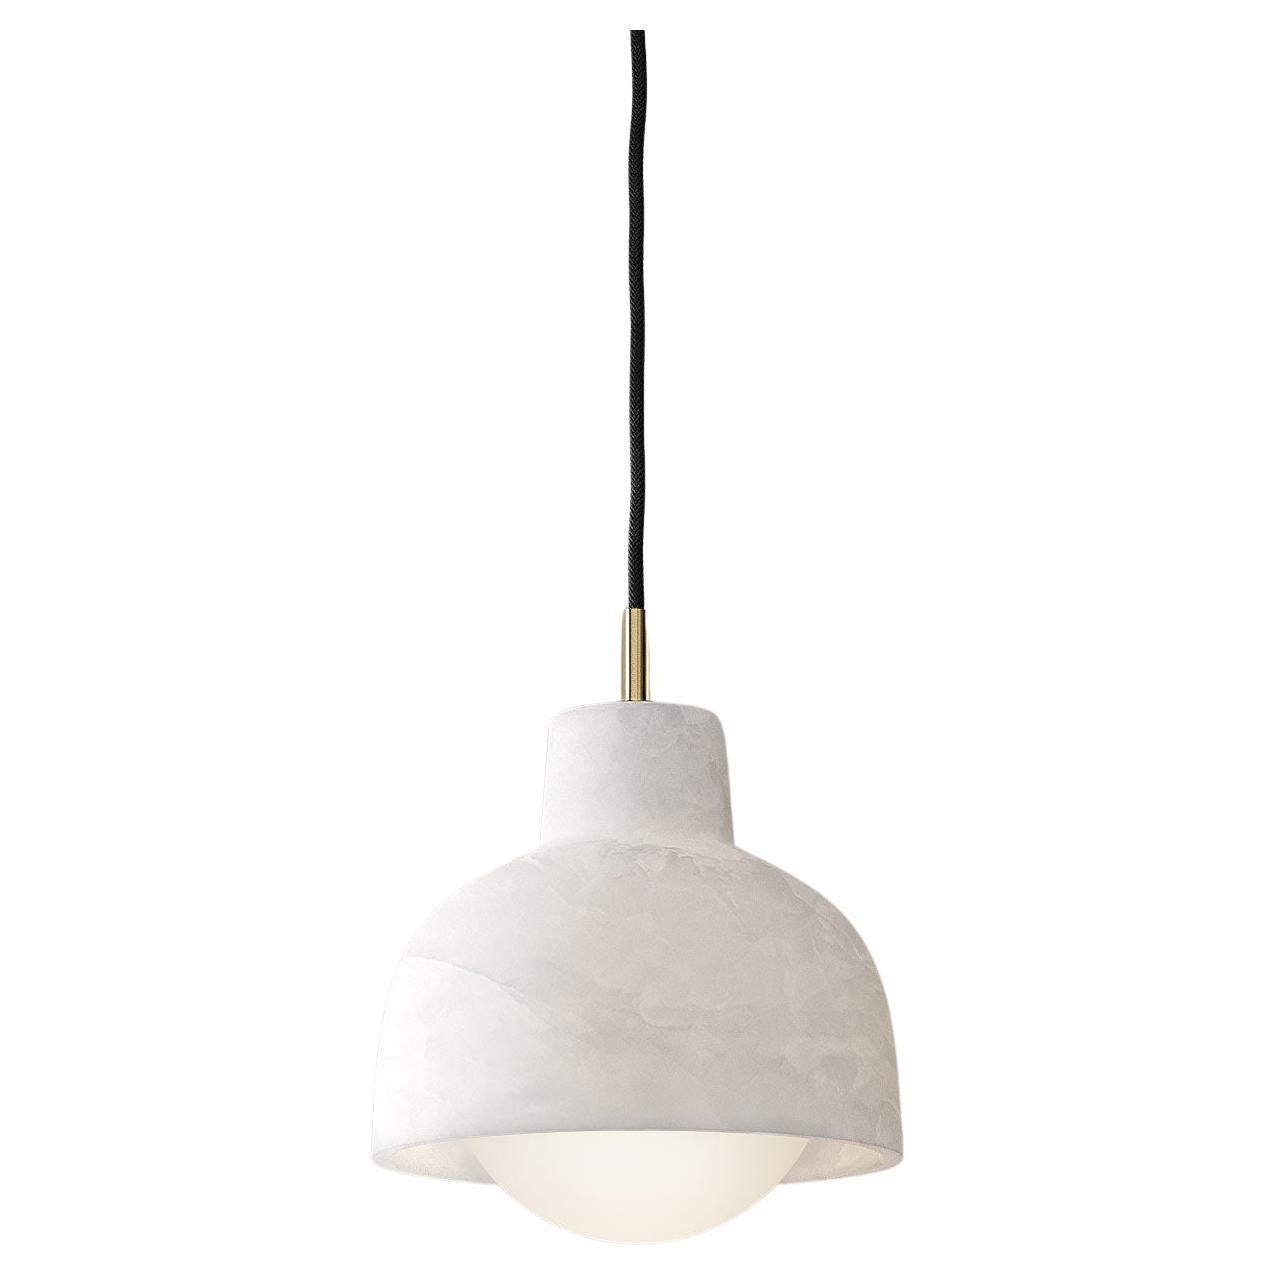 Dbh-02 - Pendant Lamp For Sale